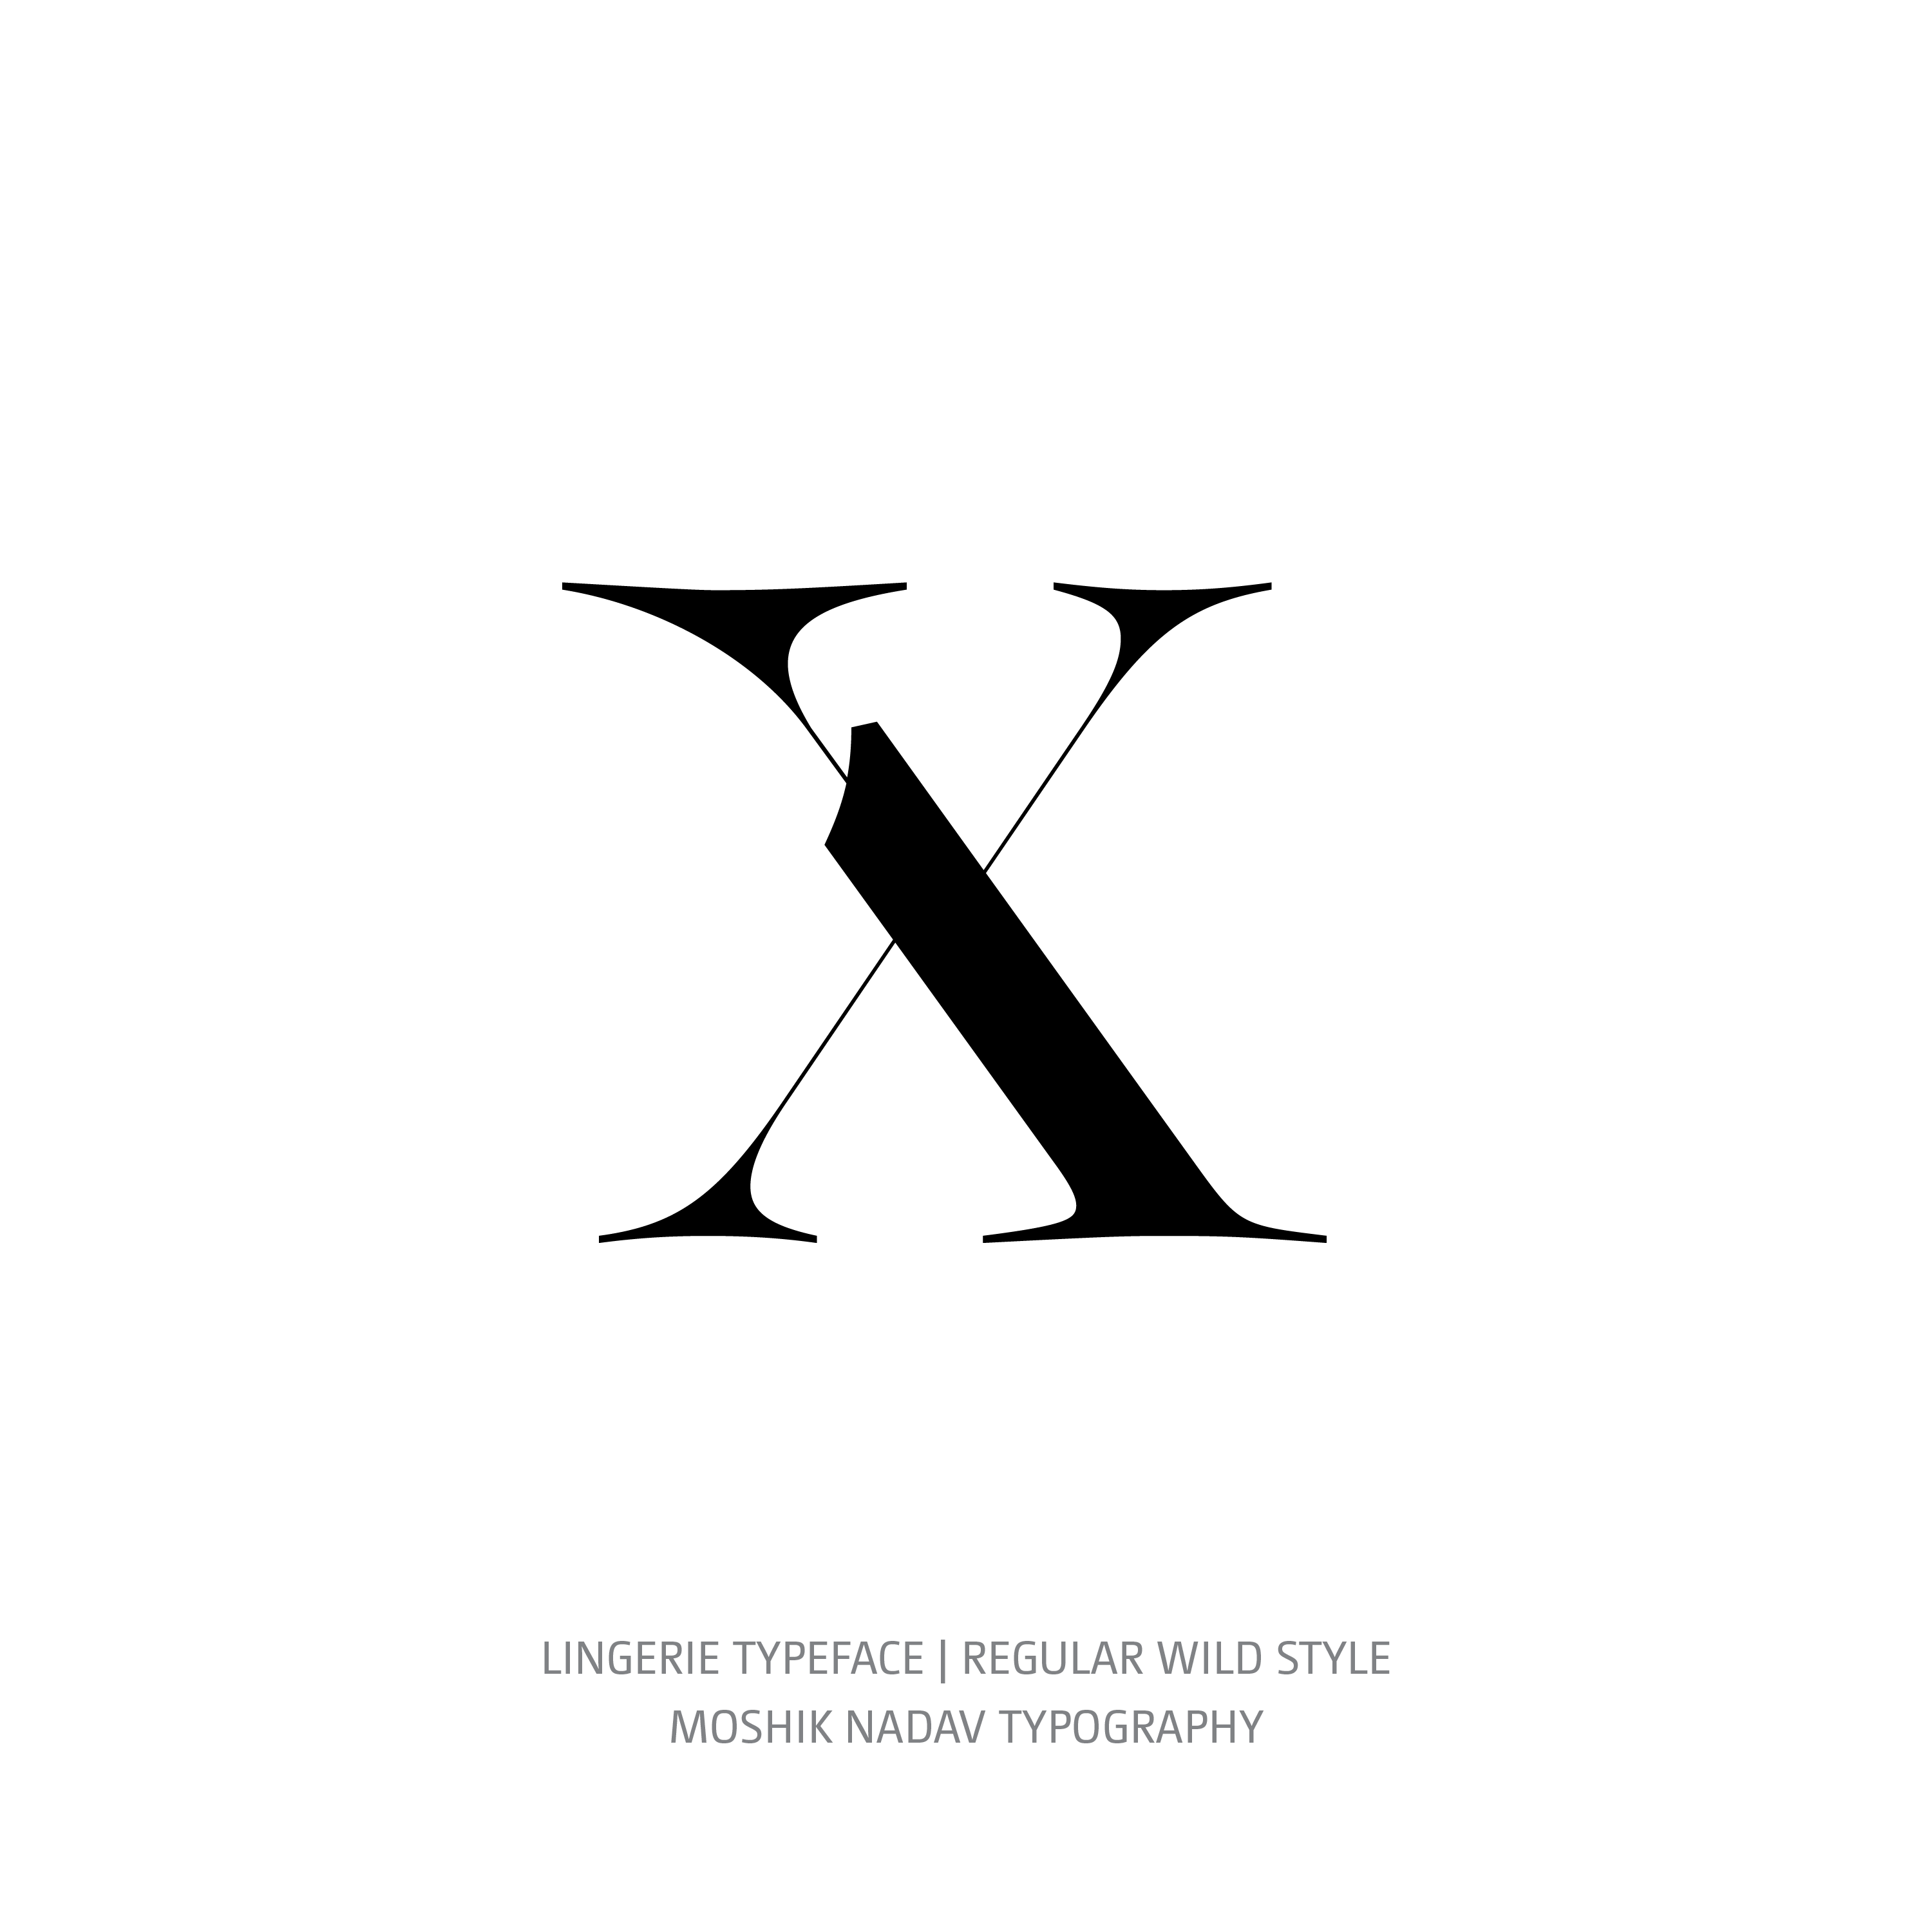 Lingerie Typeface Regular Wild x